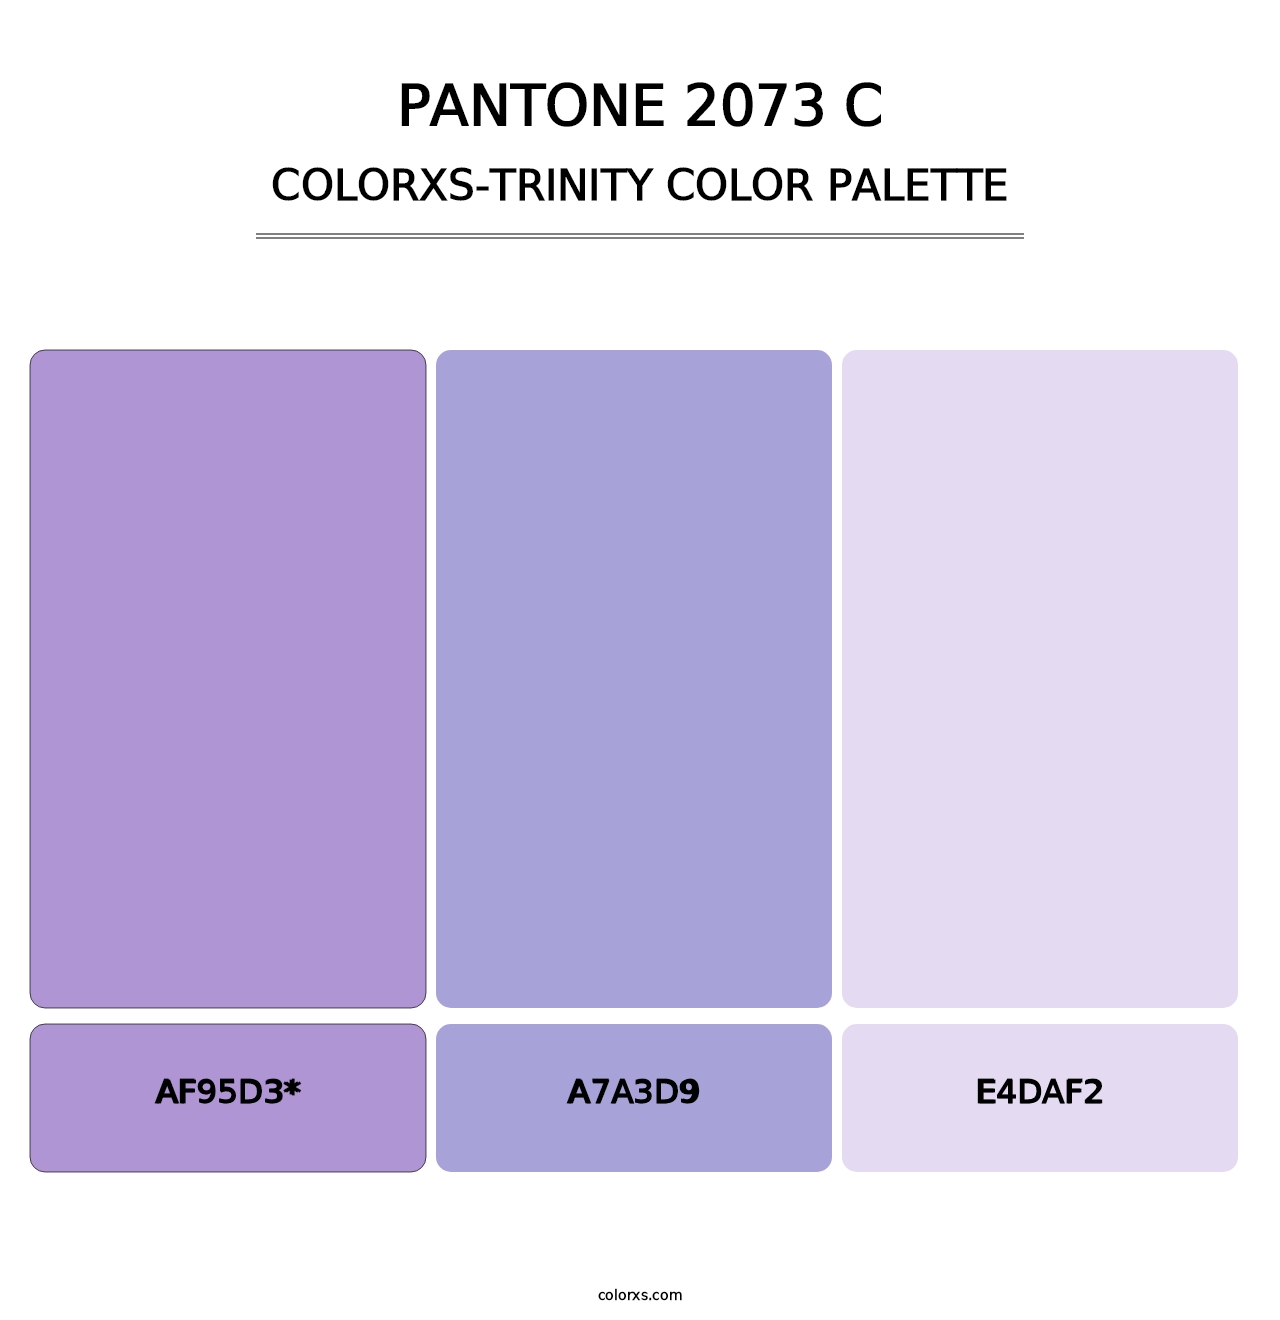 PANTONE 2073 C - Colorxs Trinity Palette